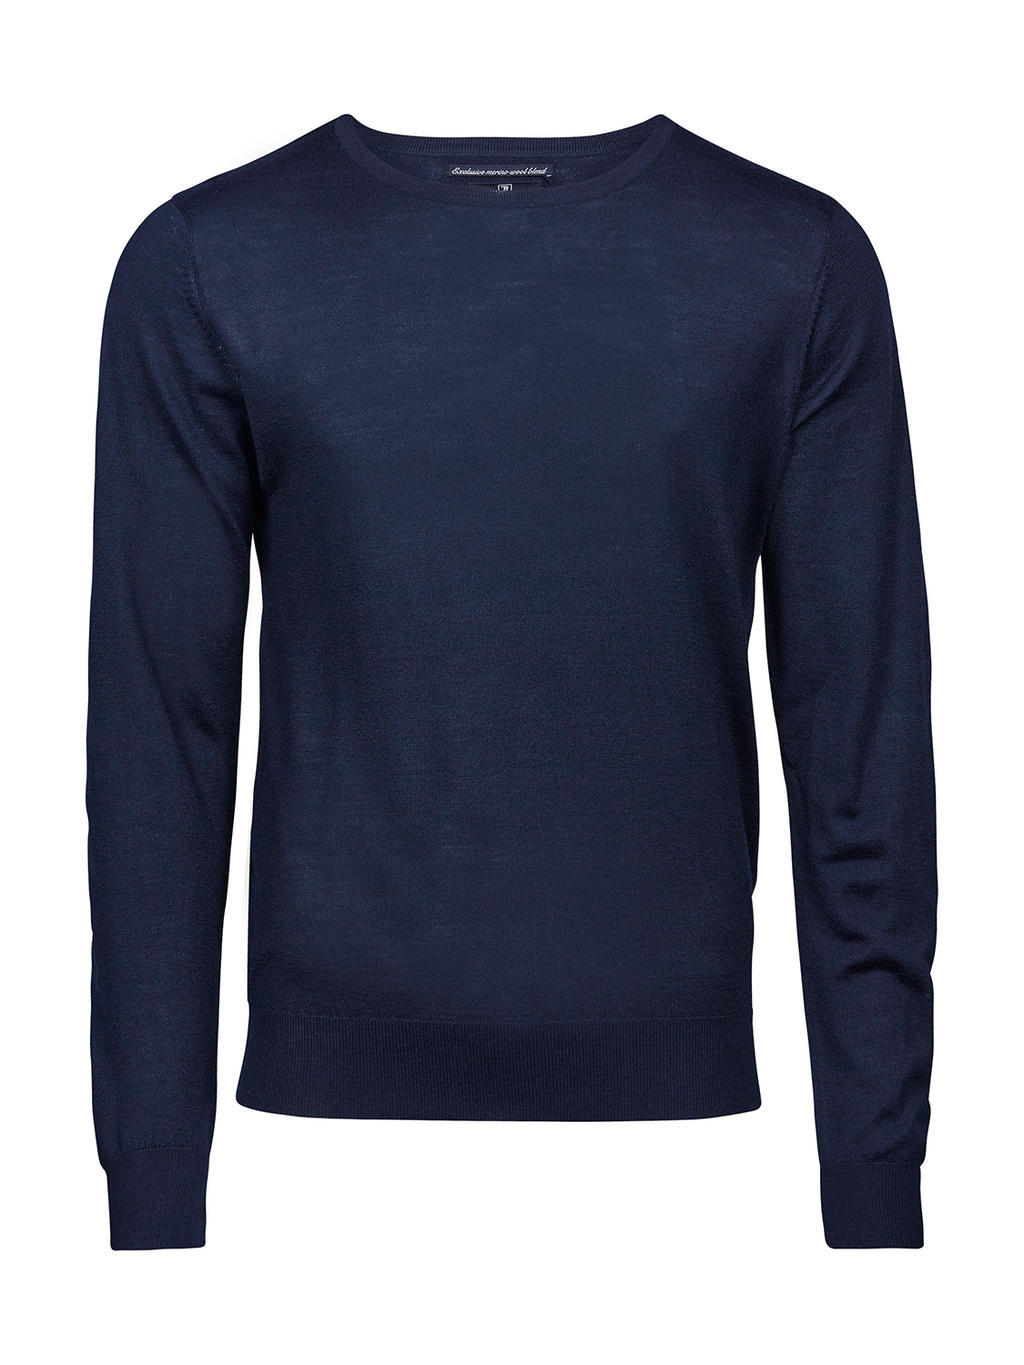 Pánský svetr s merinem Barva: námořní modrá, Velikost: XL